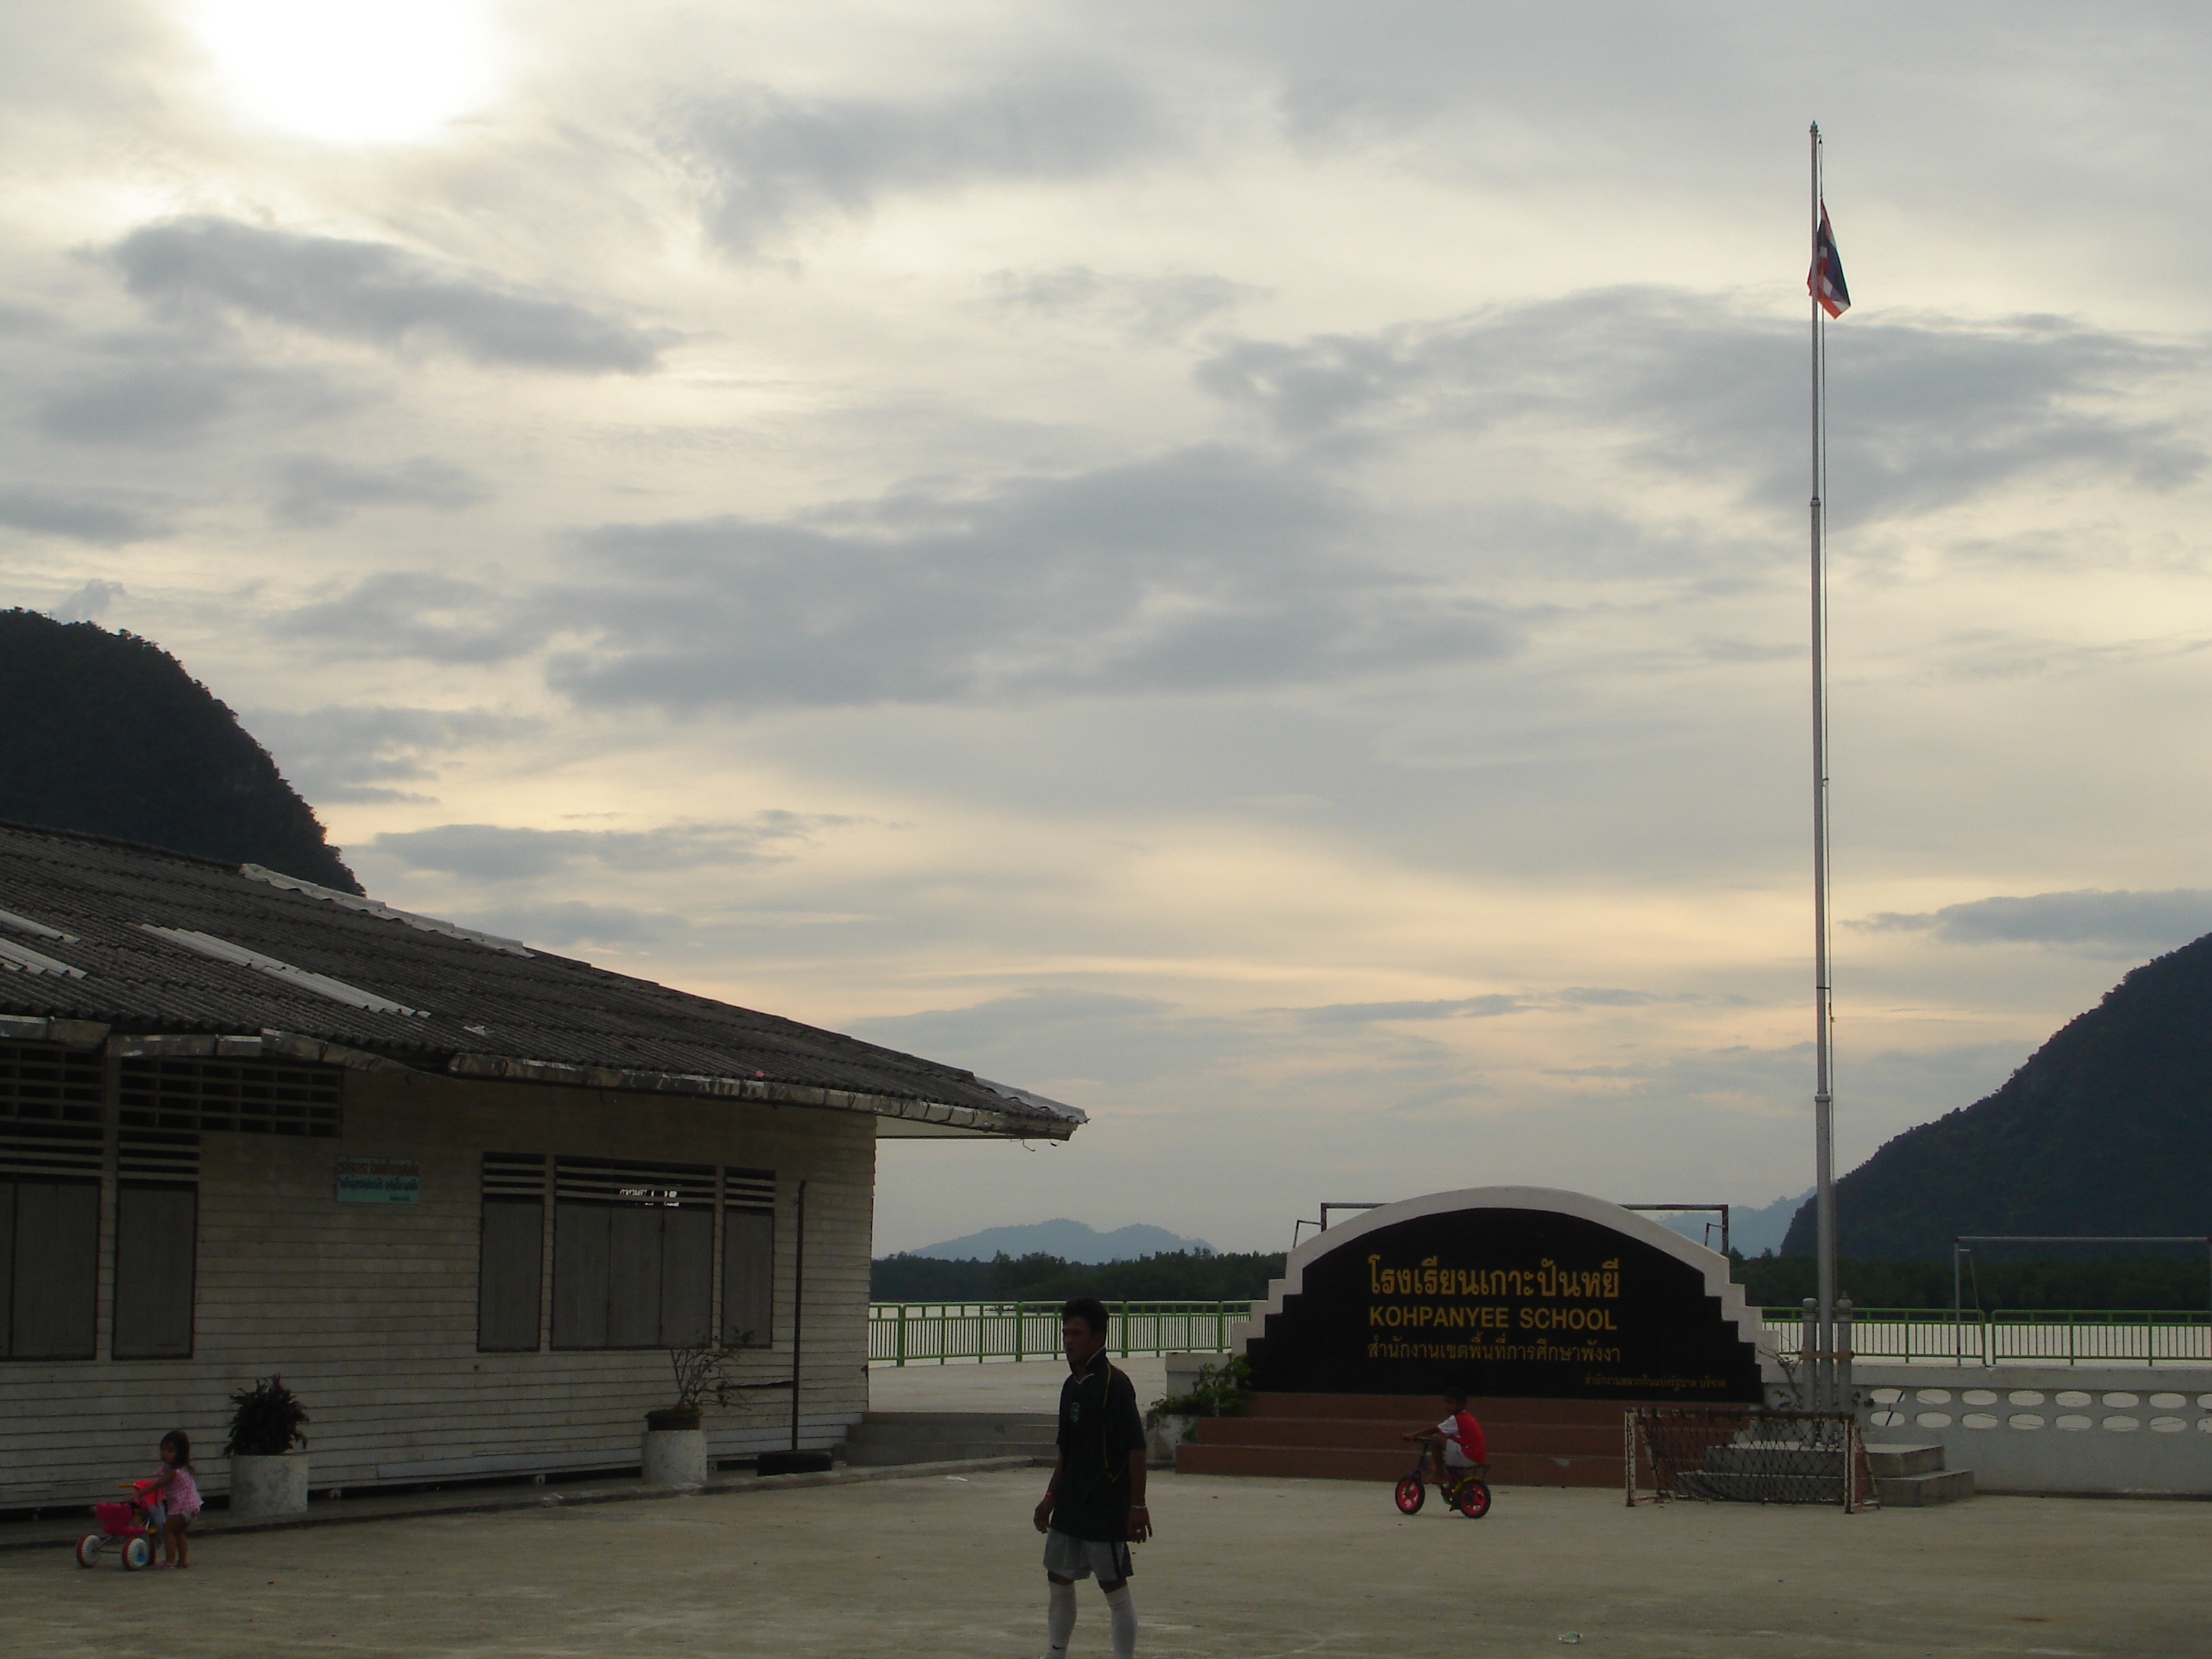 Koh Panyi School, Phang Nga Bay, Thailand. Photo taken by Mark Joseph Jochim on January 3, 2006.